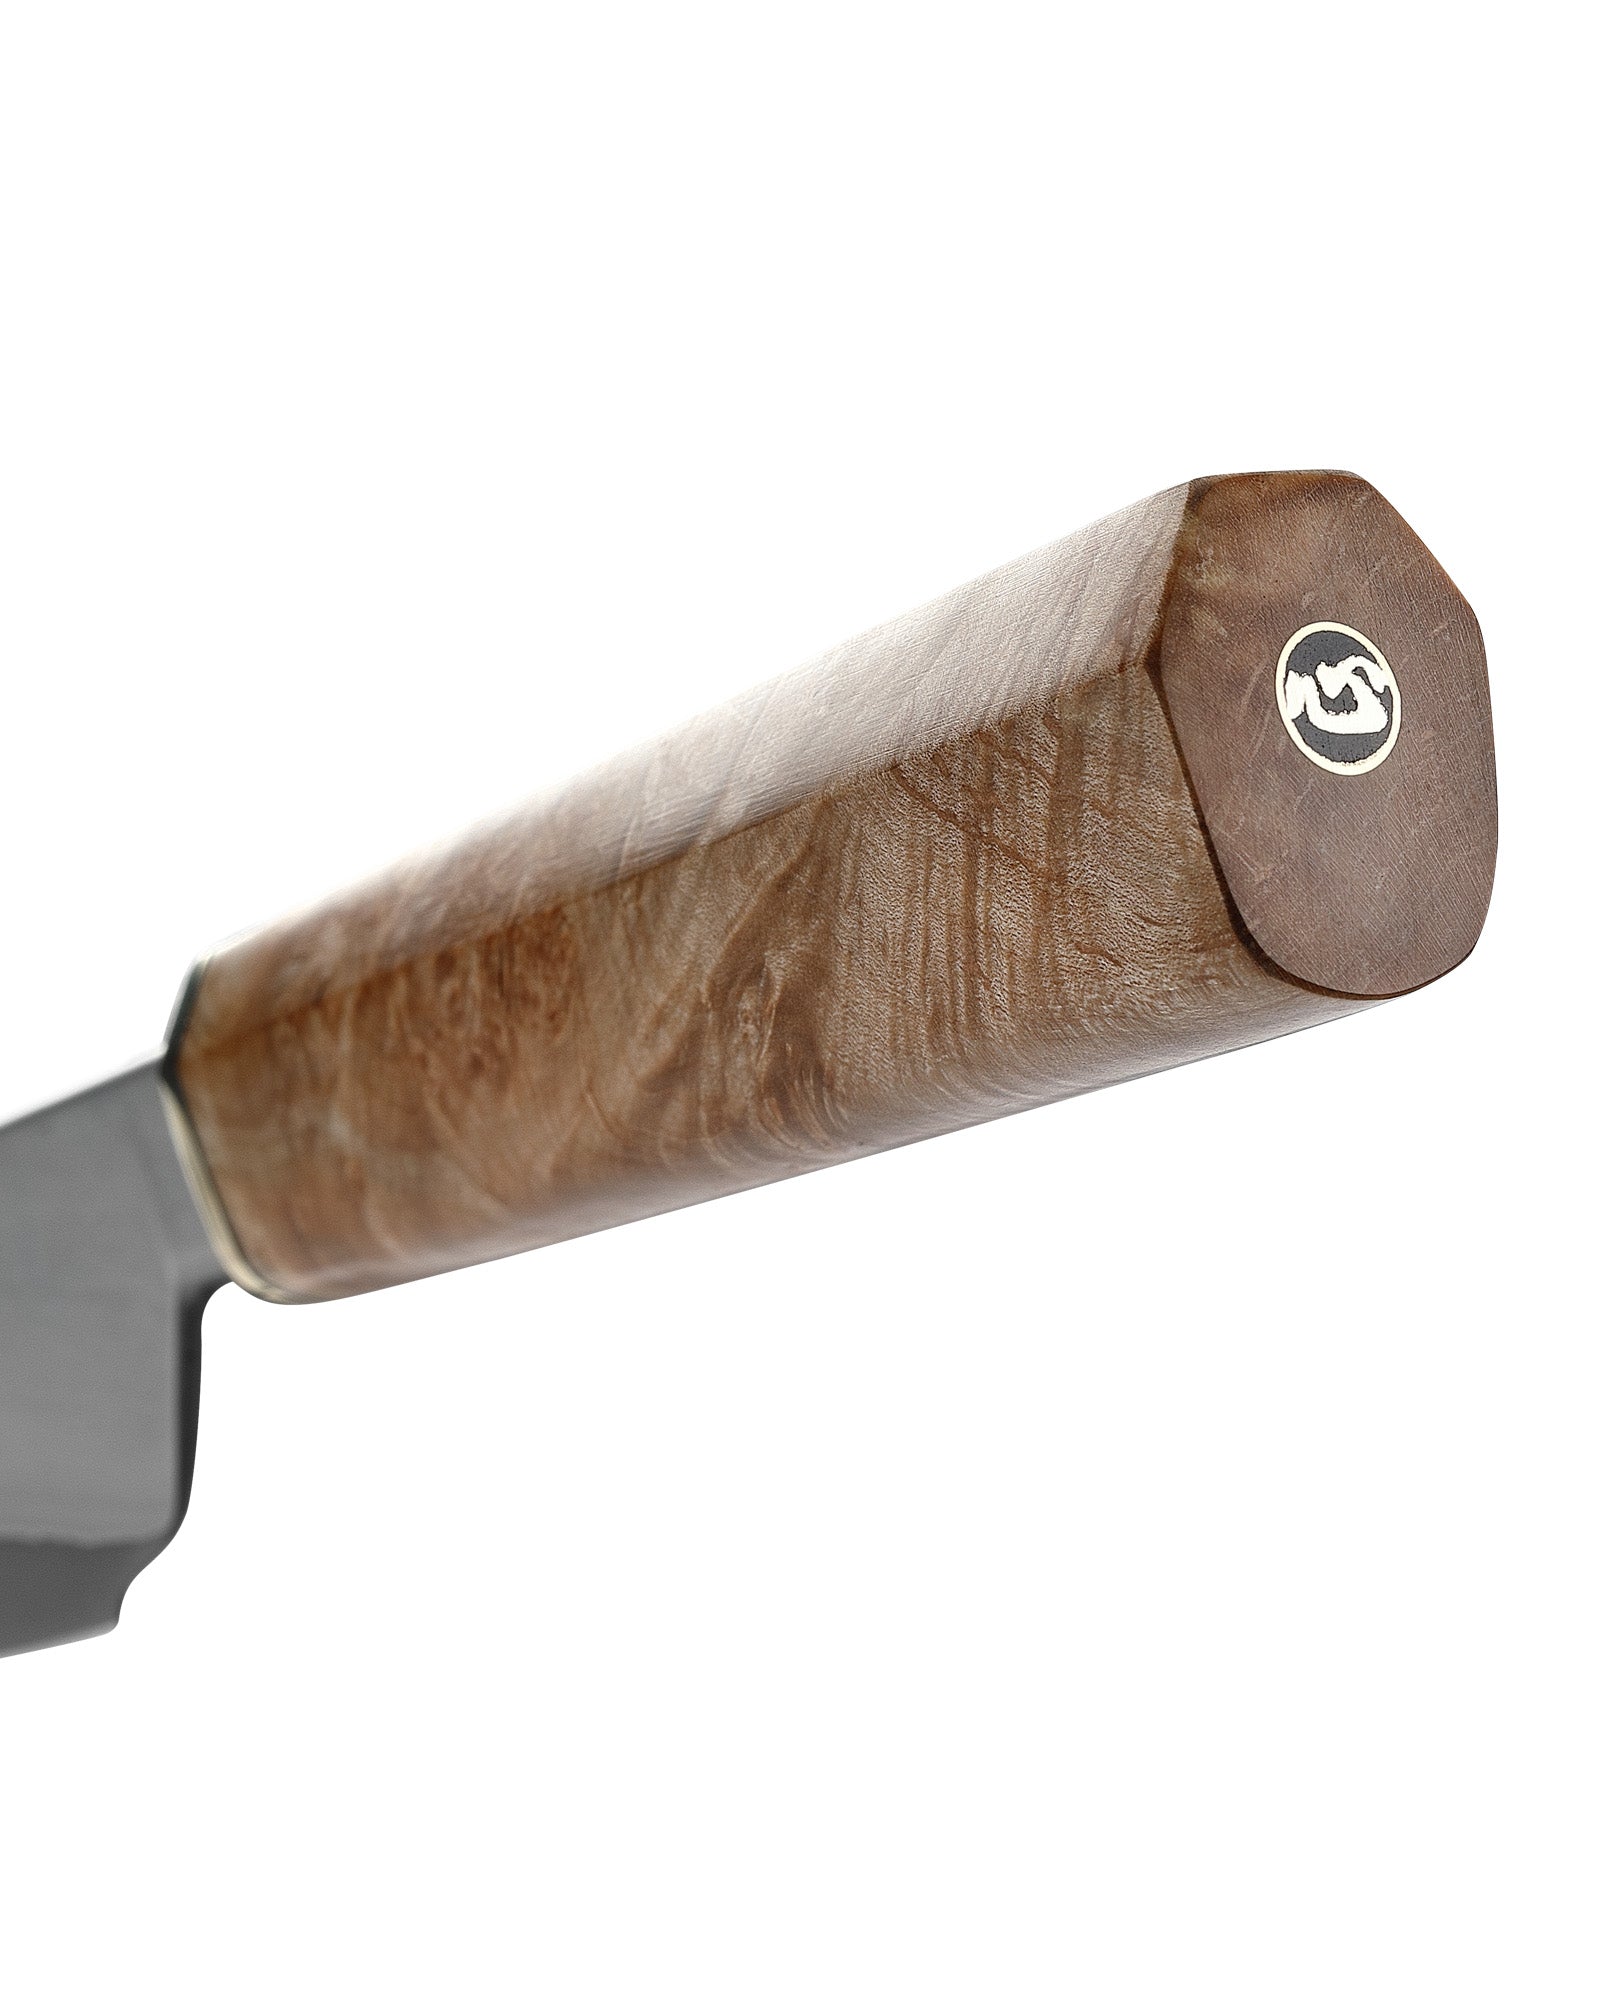 High quality zinc alloy utility knife set engraving open carton craft –  AOOKMIYA